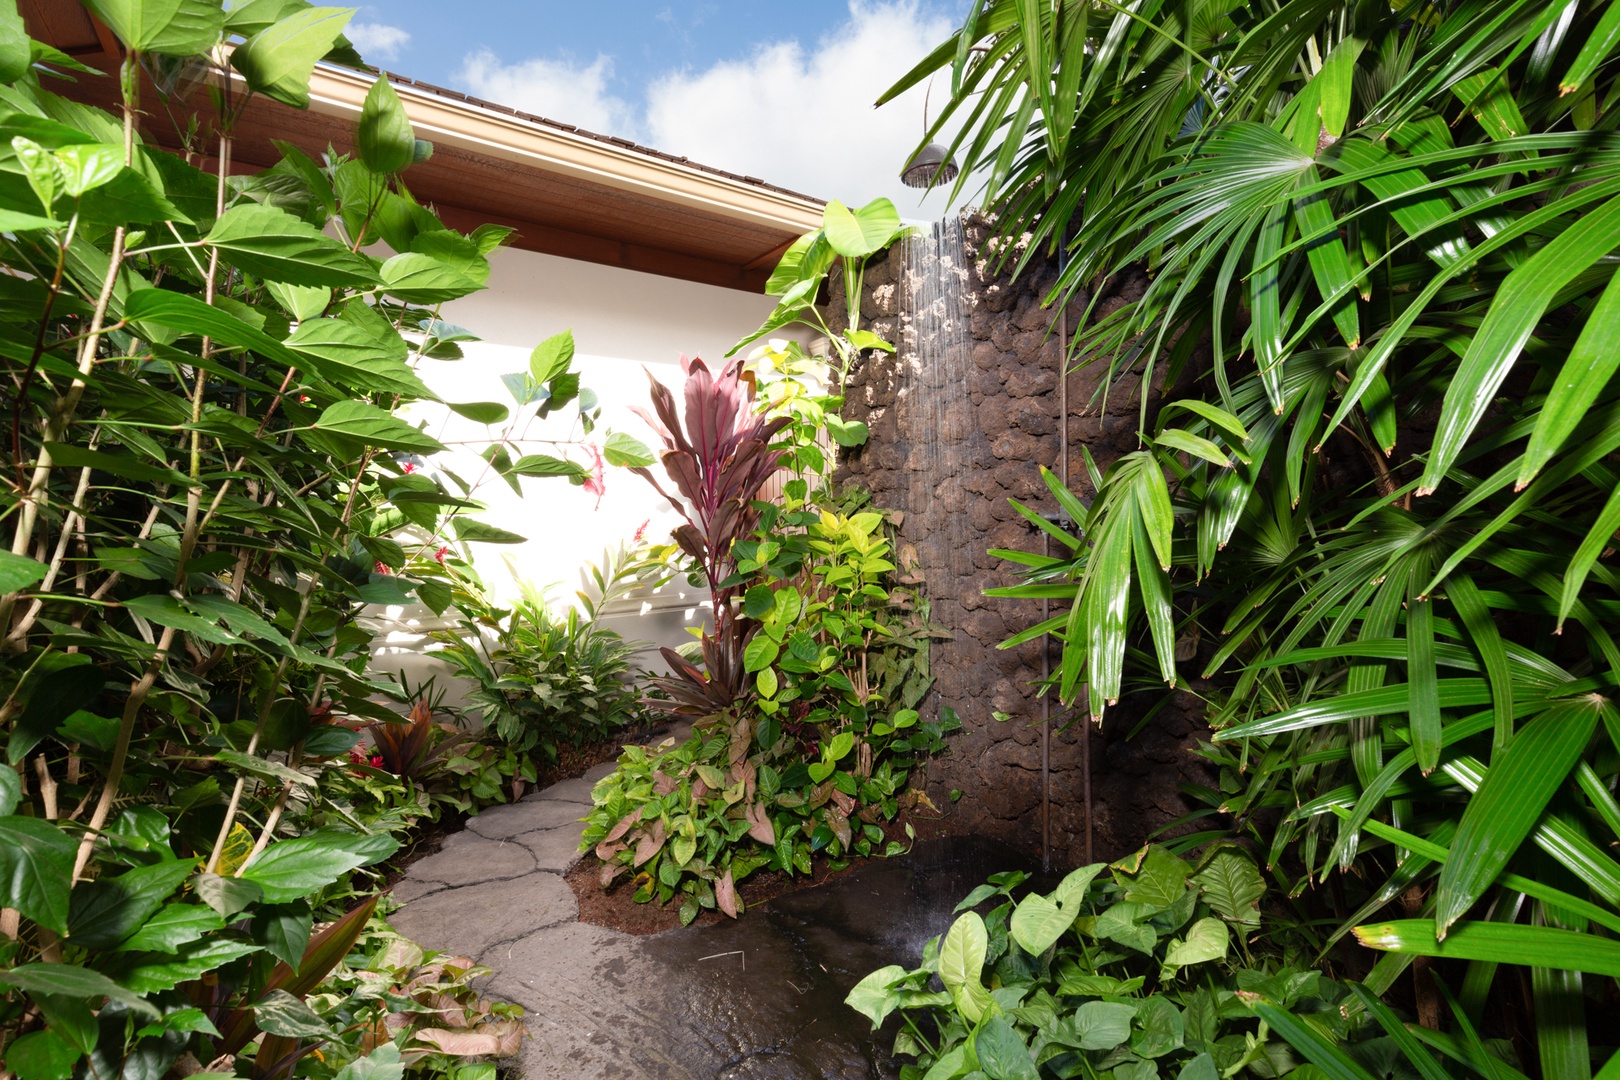 Kailua Kona Vacation Rentals, 4BD Hainoa Estate (102) at Four Seasons Resort at Hualalai - Primary suite garden shower- a tropical treat!